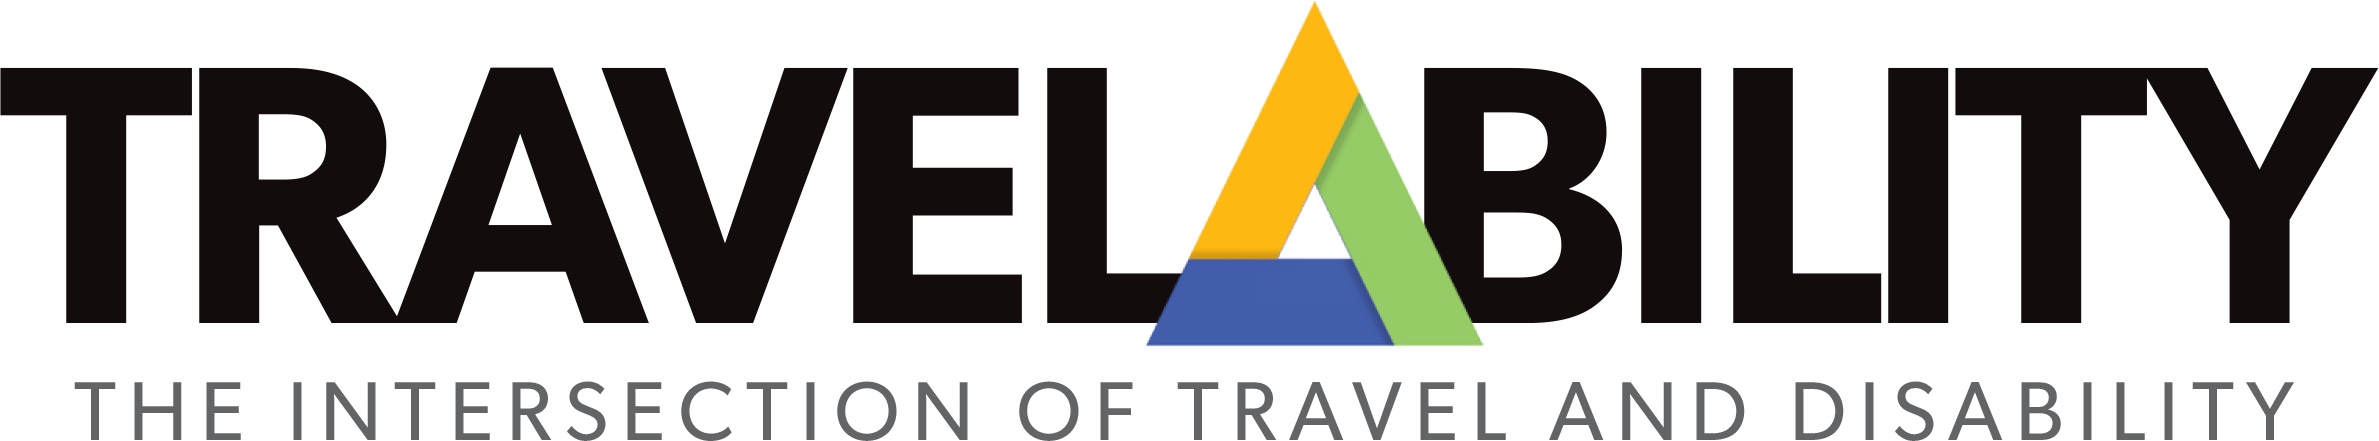 Travelability logo